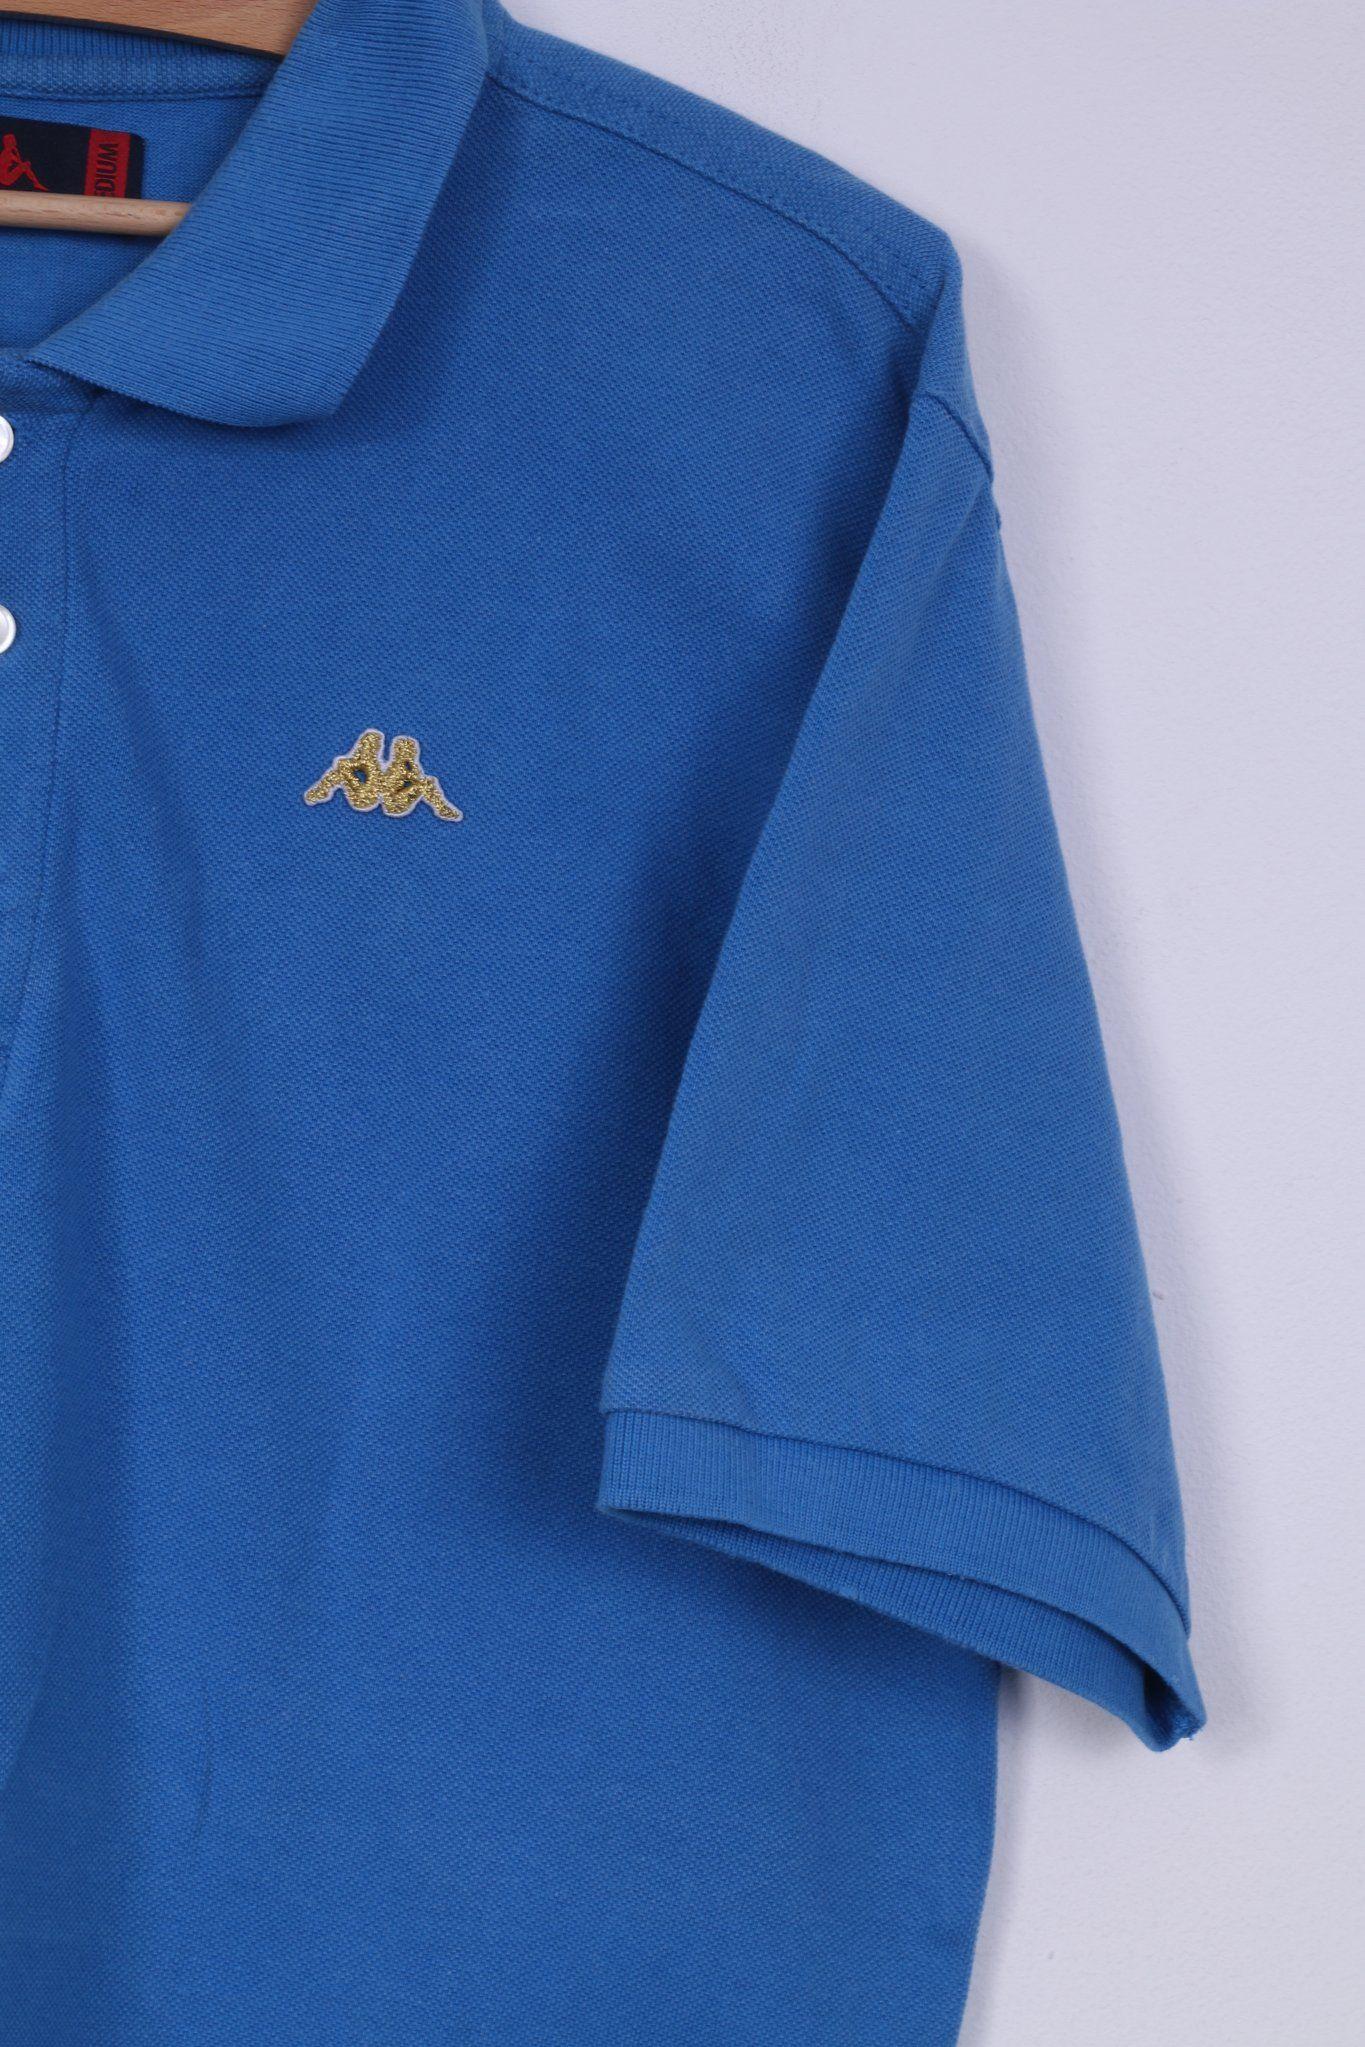 Gold Polo Logo - Robe Di Kappa Mens M Polo Shirt Cotton Blue Gold Logo